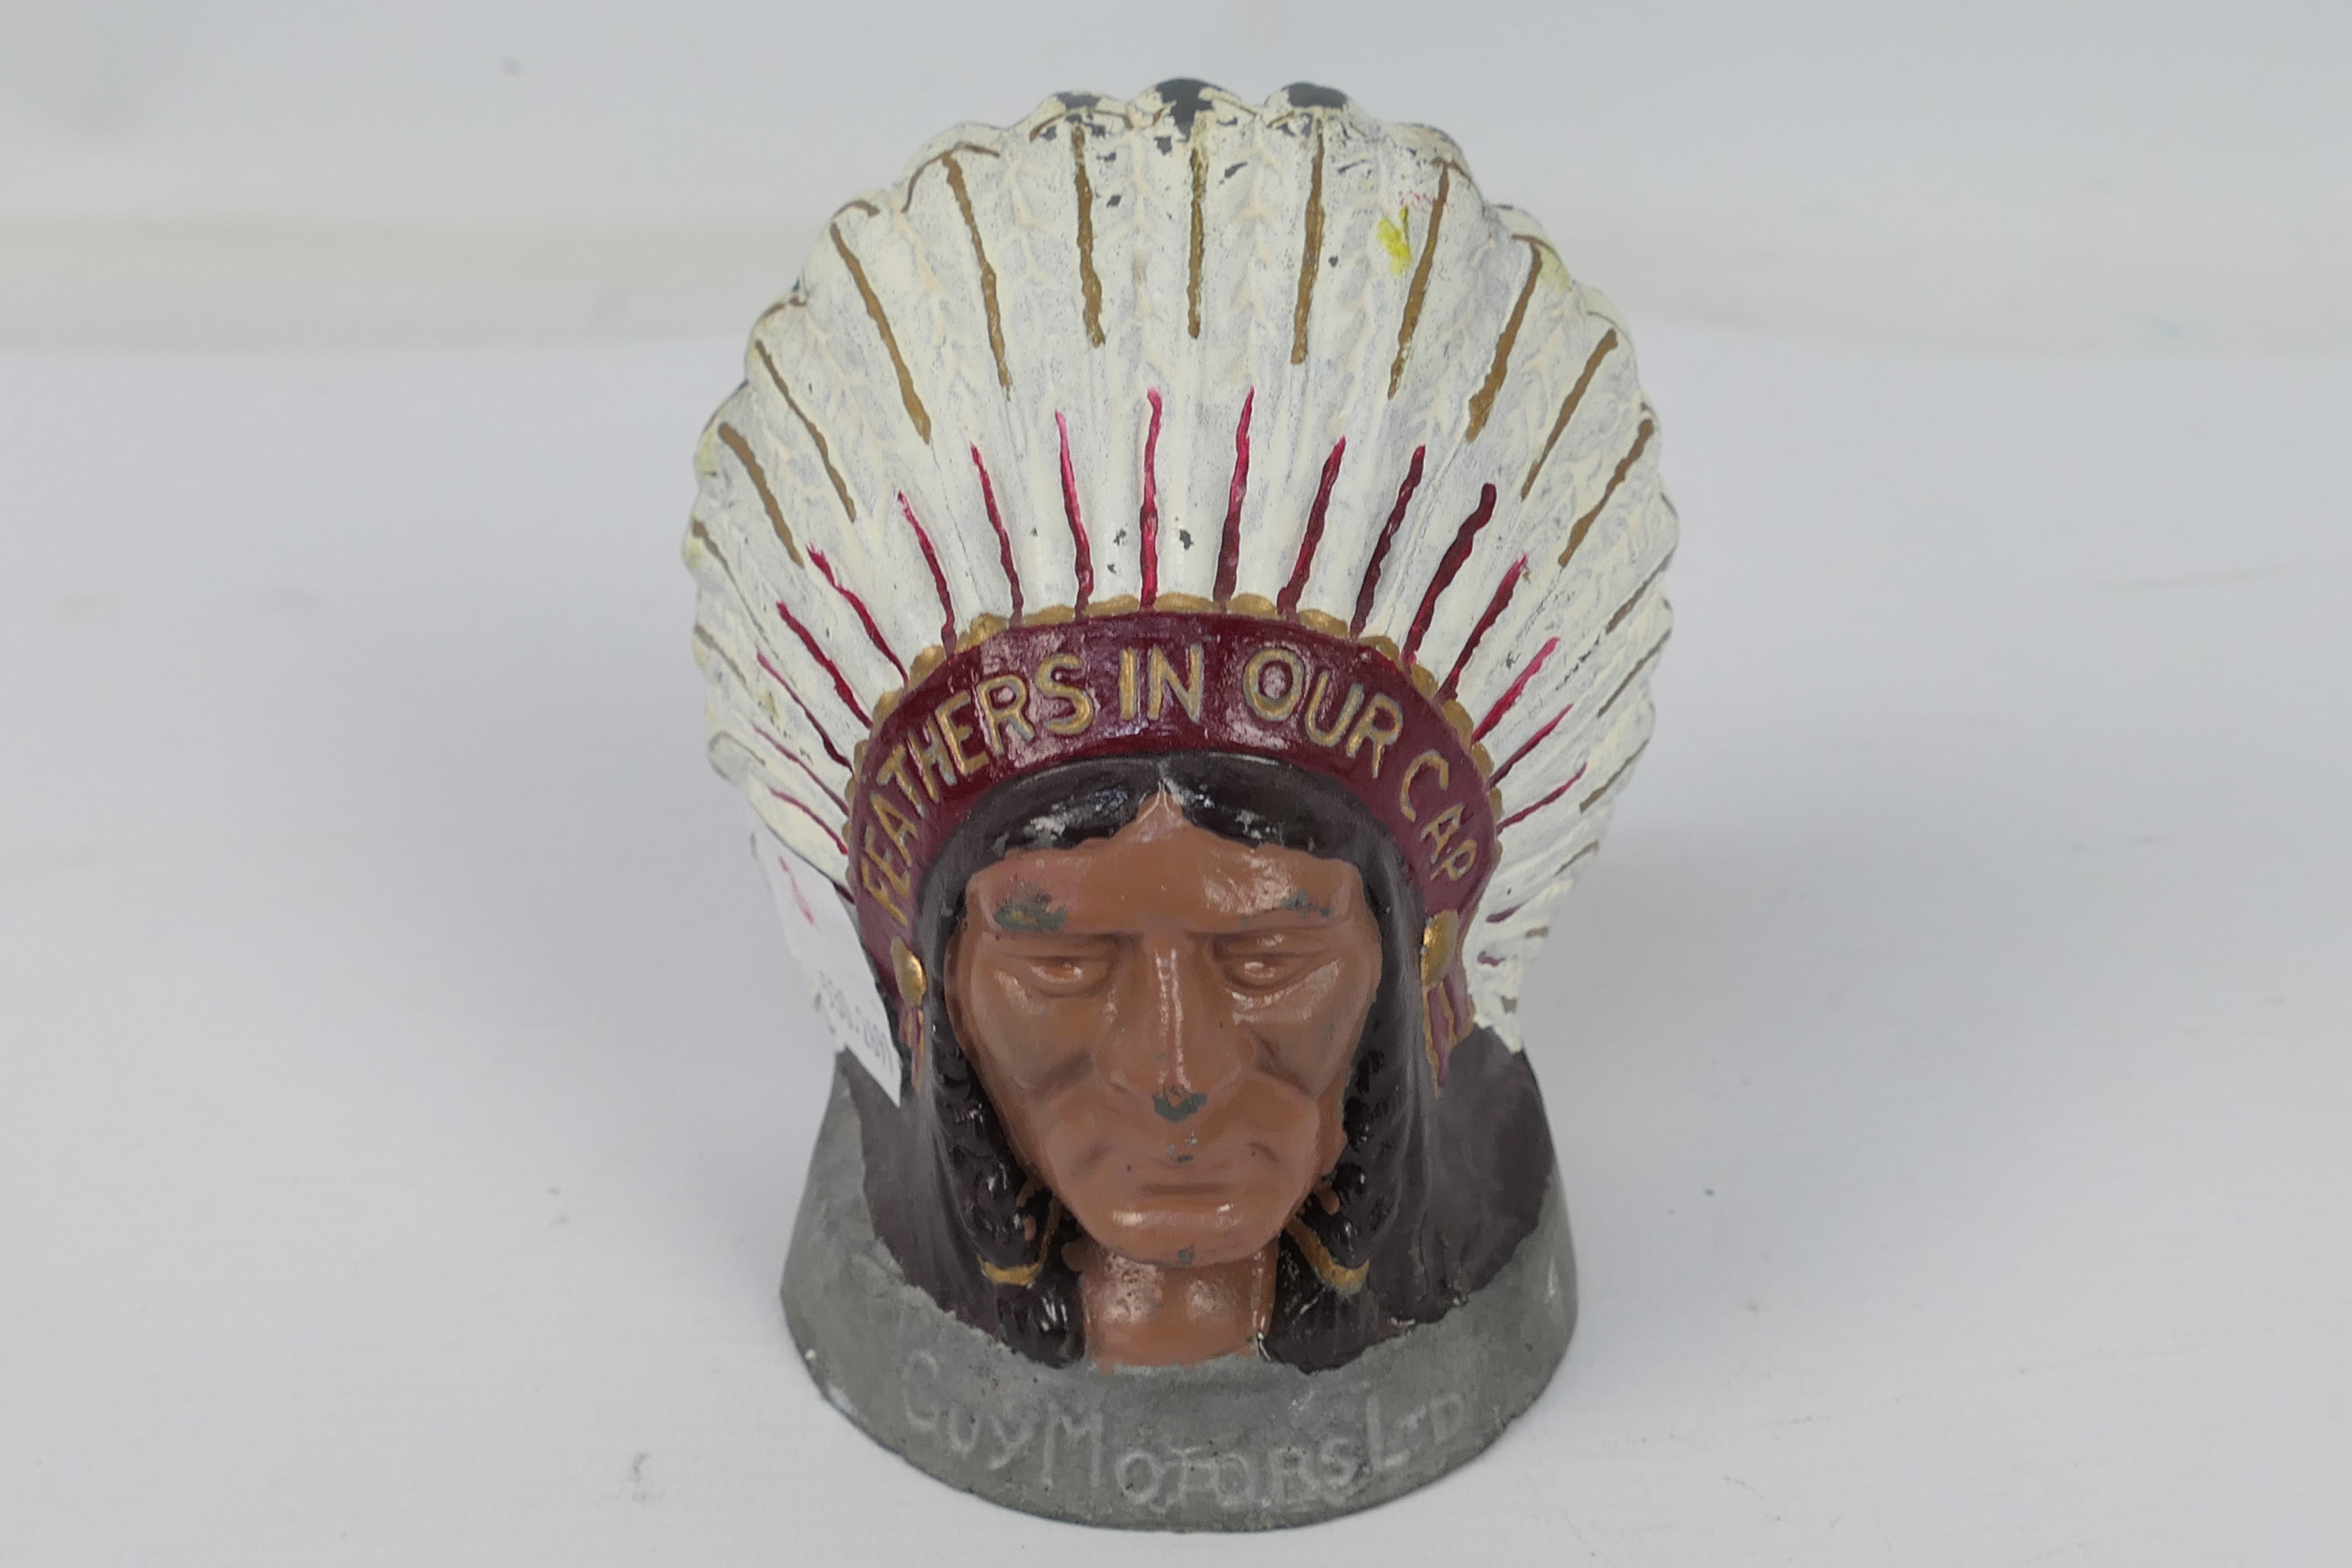 A cast metal Guy Motors Ltd mascot / advertising piece depicting a native American in headdress